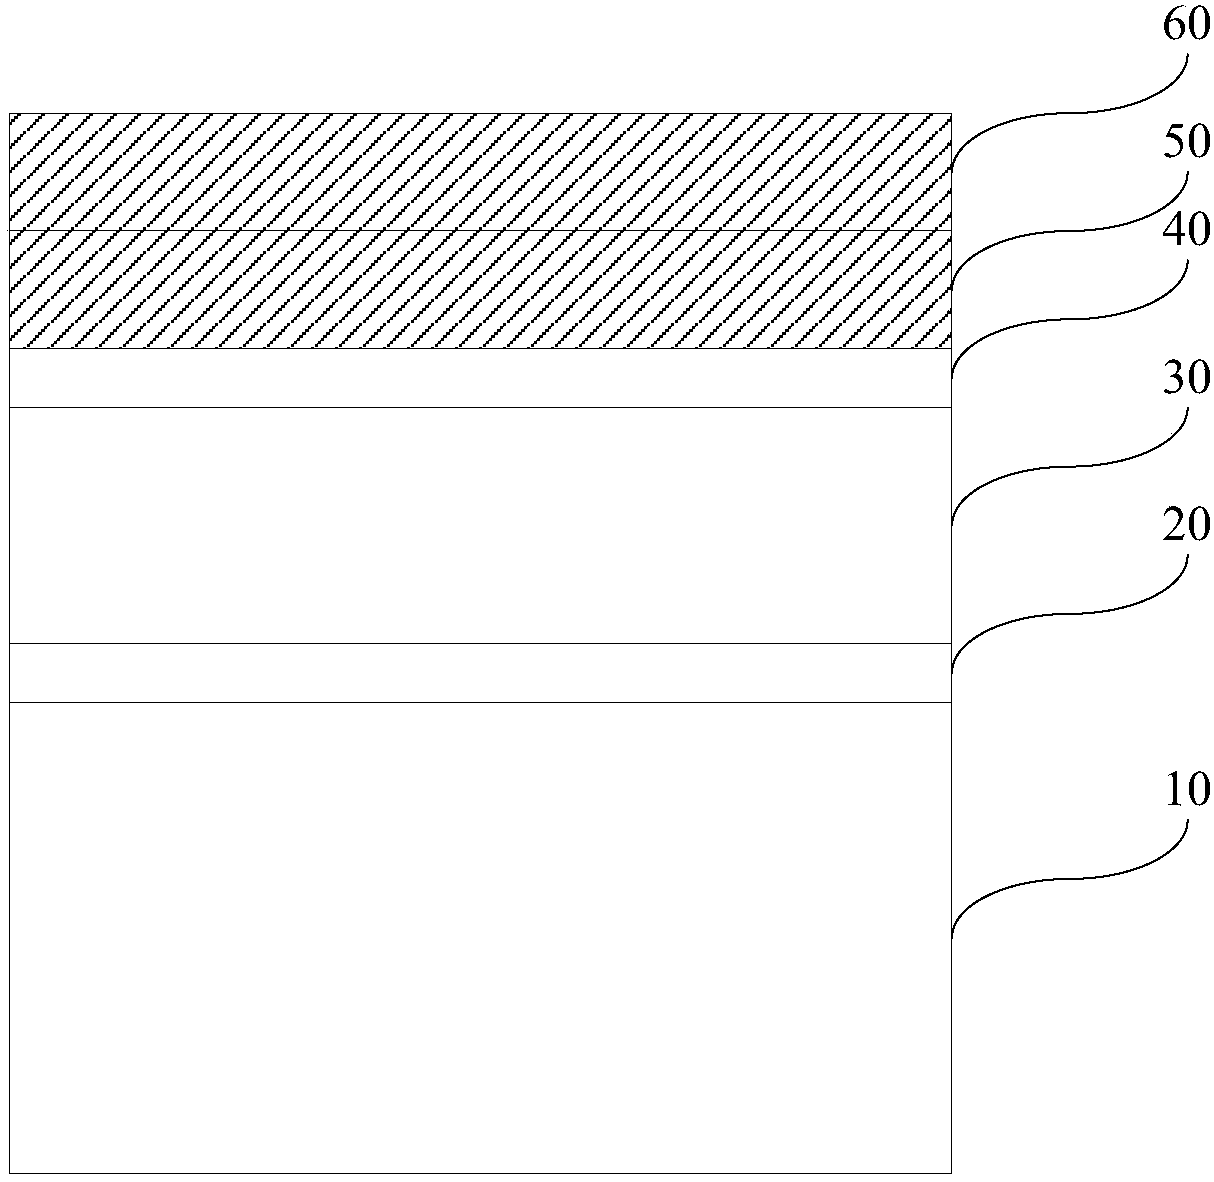 A preparation method of a light emitting diode epitaxial wafer and a light emitting diode epitaxial wafer